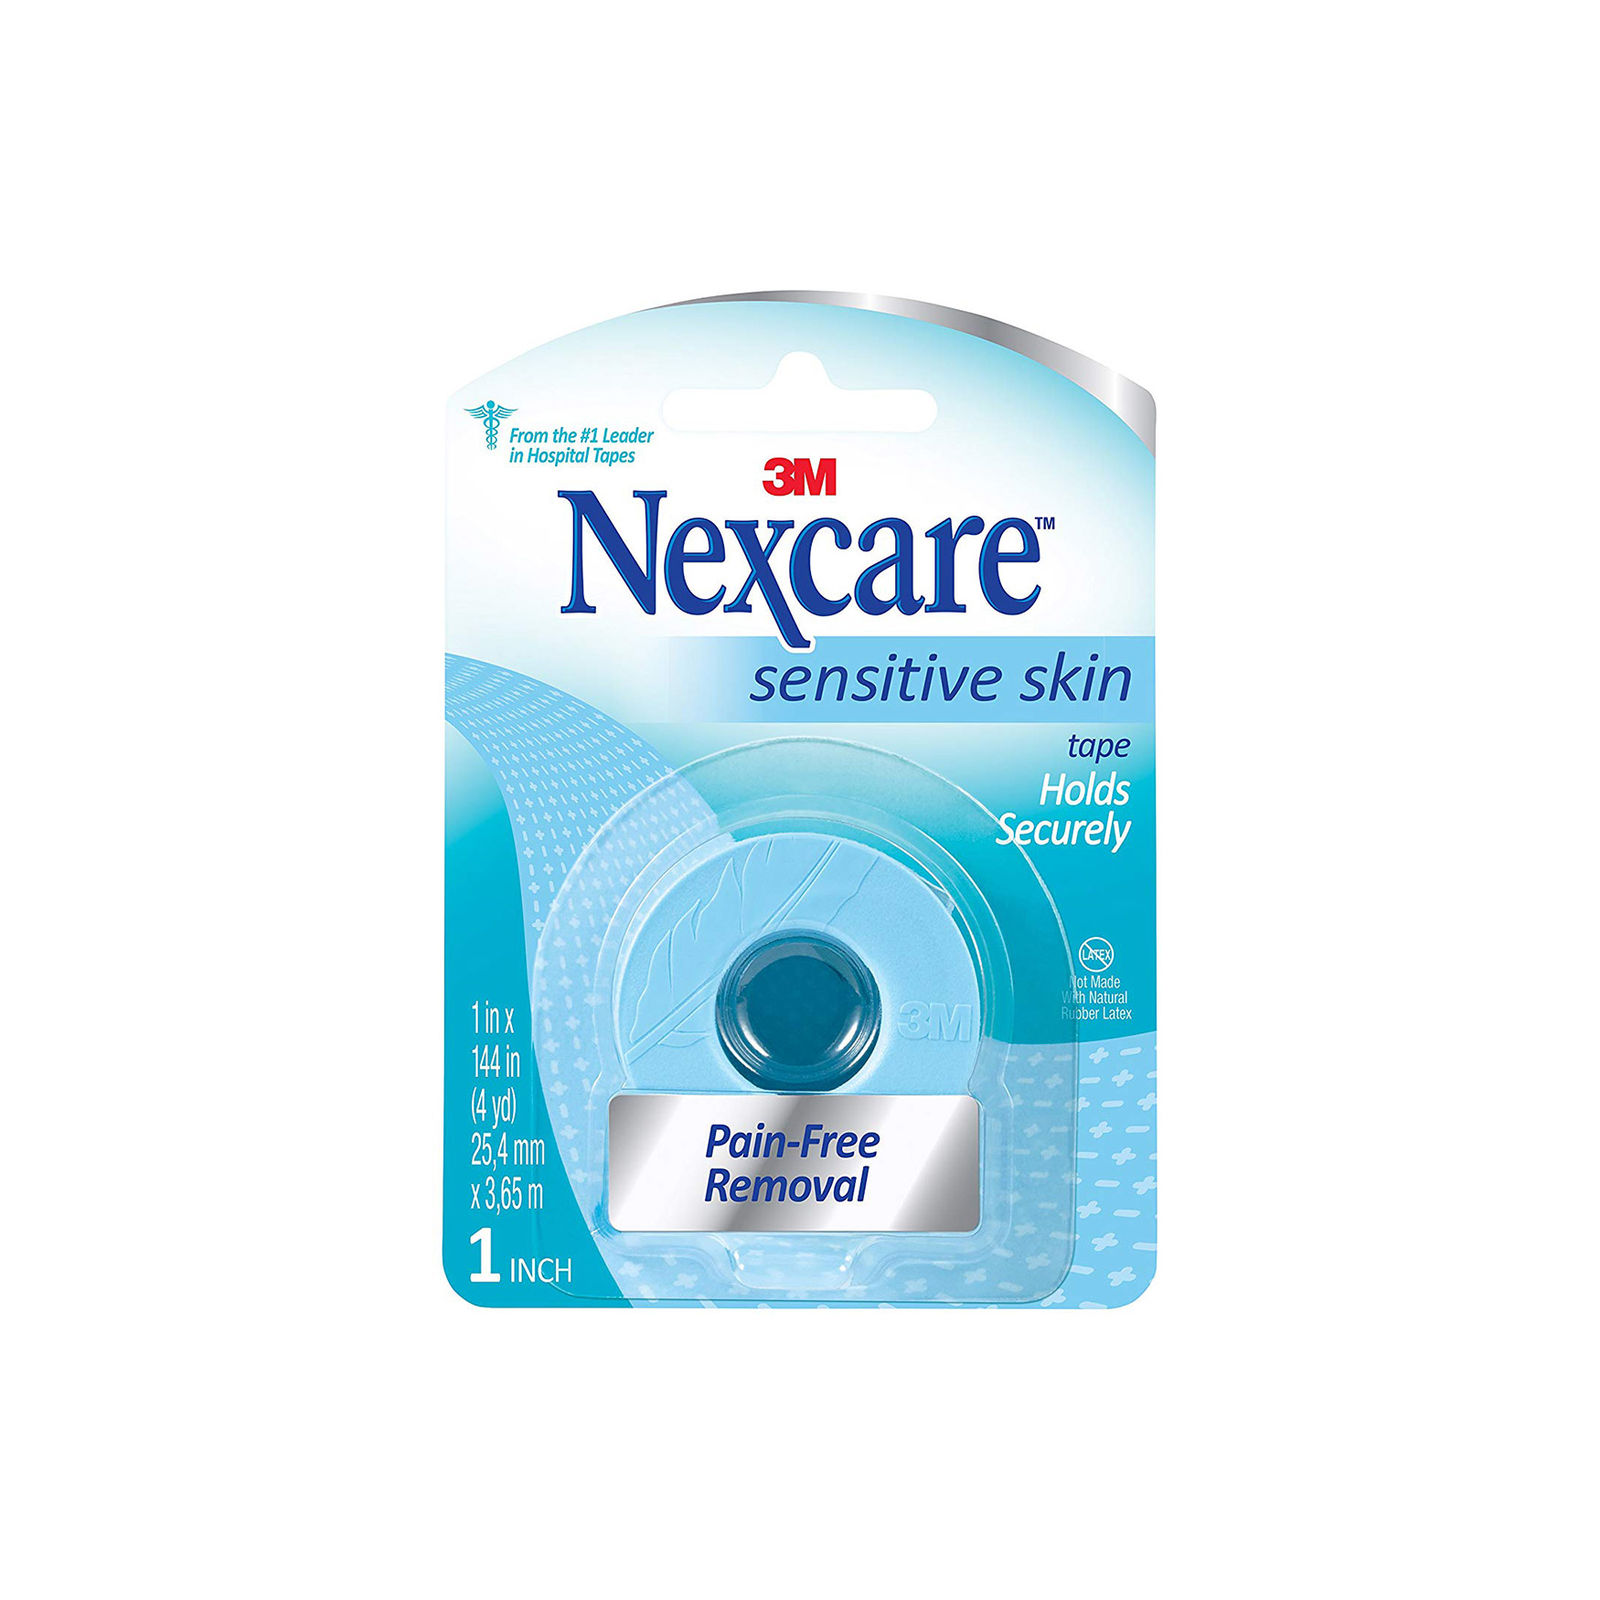 Nexcare Sensitive Skin Tape, 1 inch (6 Pack)